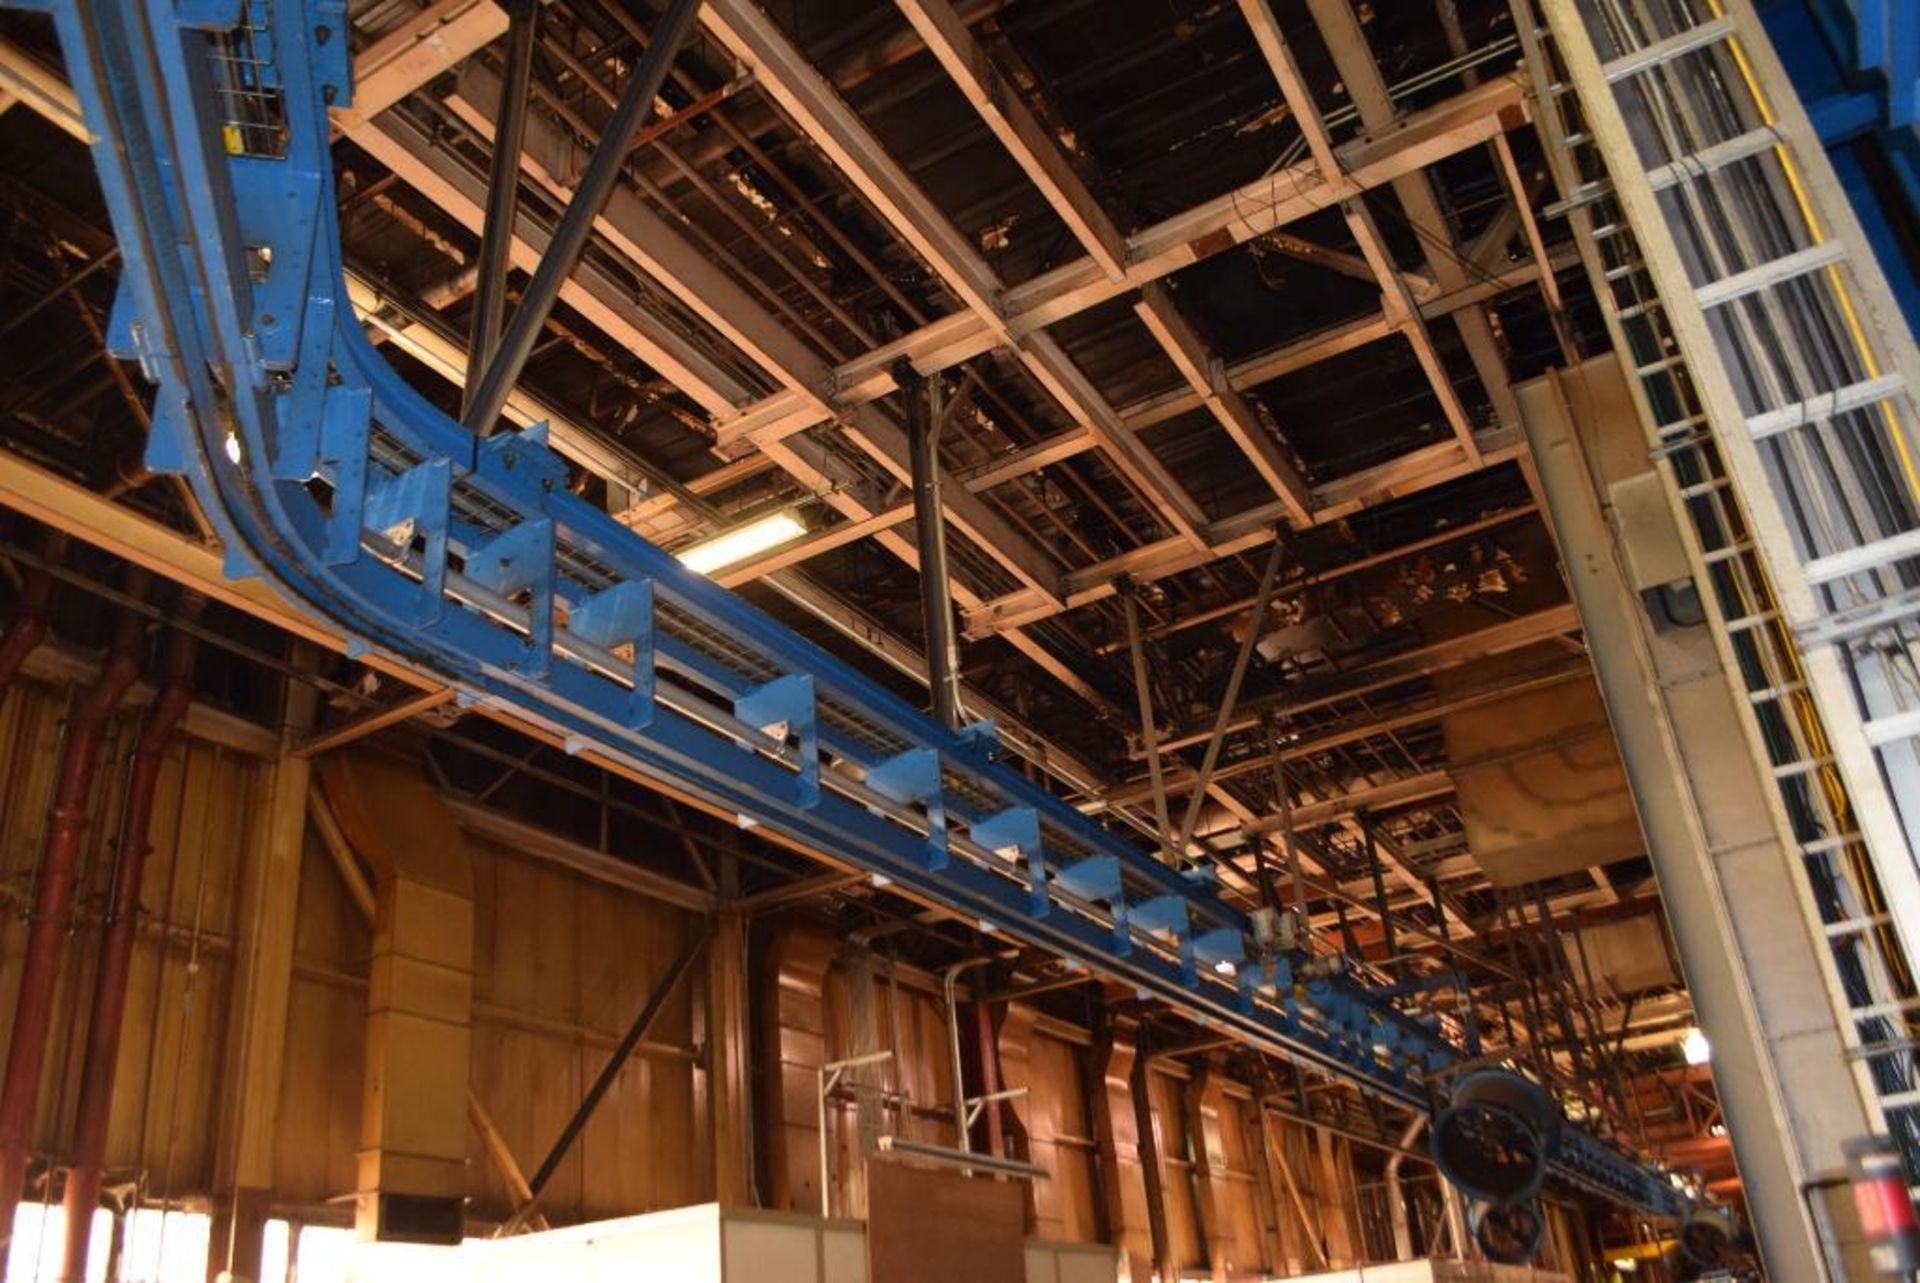 Overhead Conveyor System - Image 26 of 55